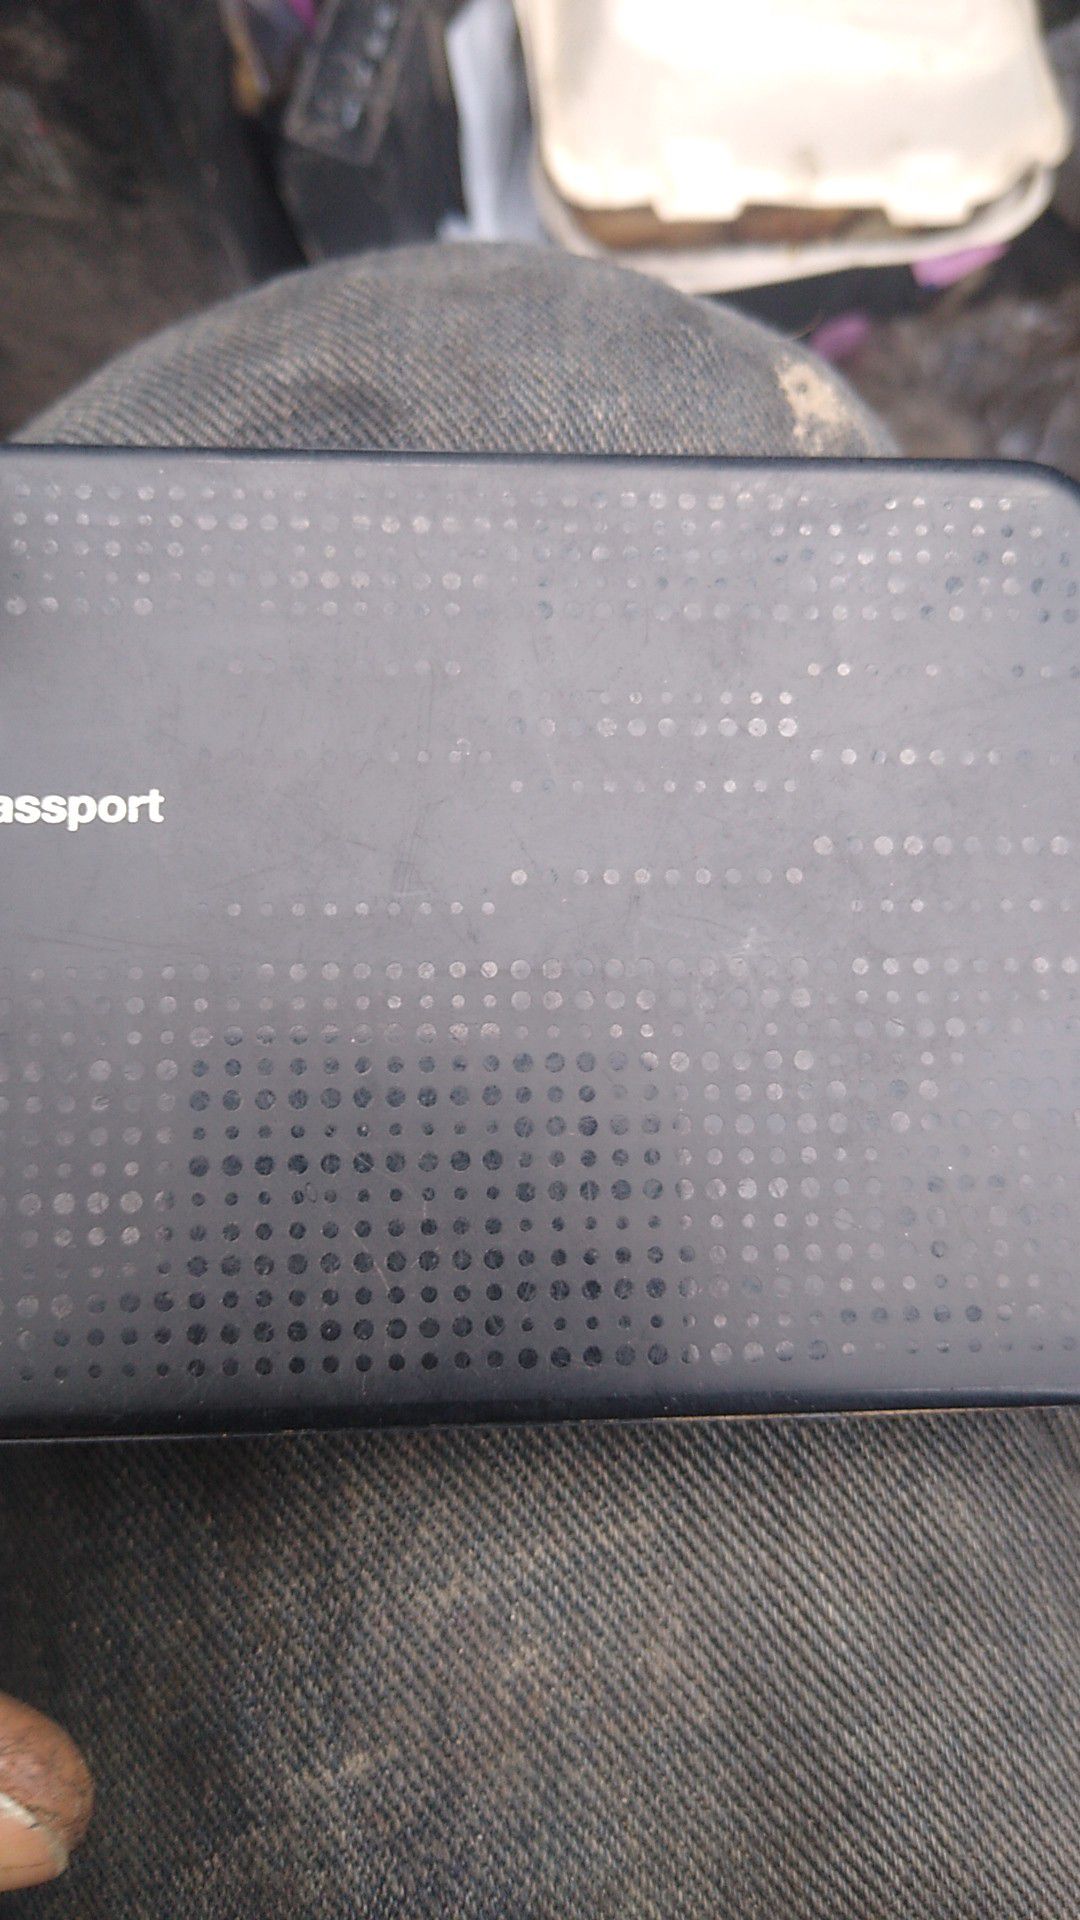 My Passport Ultra Portable Hard Drive 1Tb